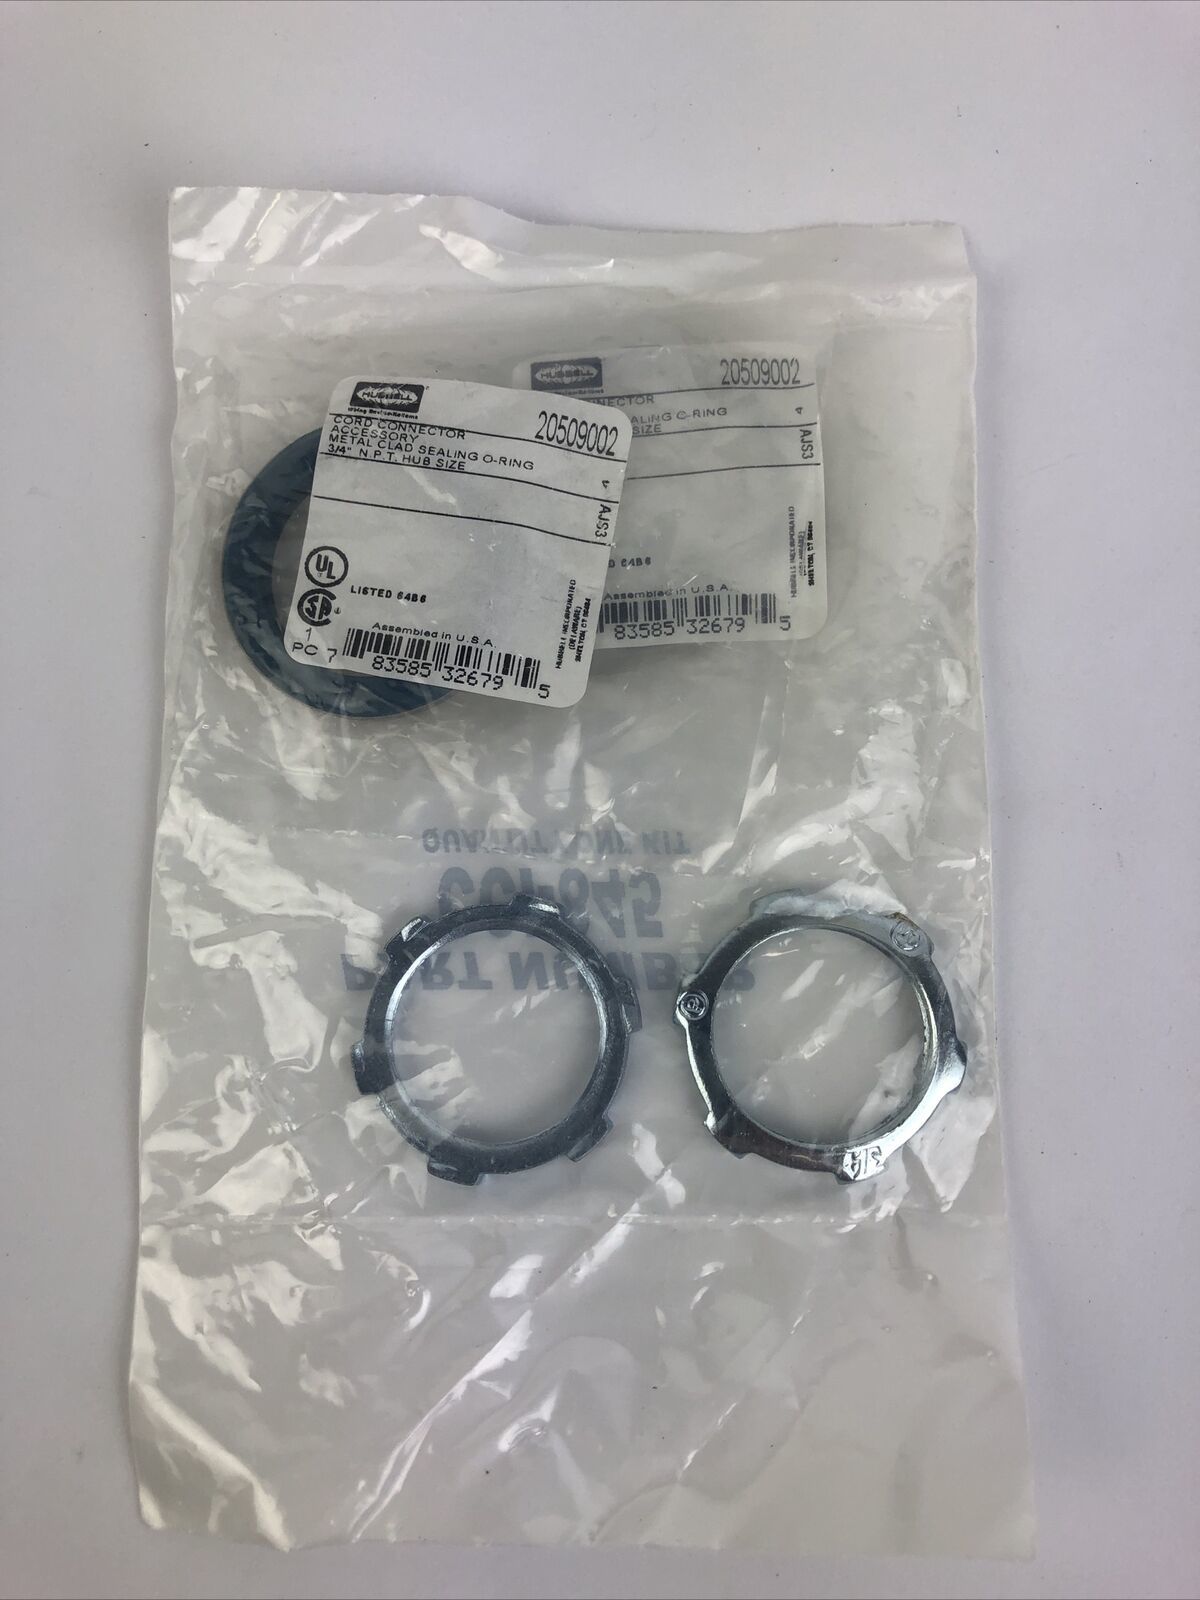 CCI-845 Connector Kit (2) 20509002 Sealing O-Rings & (2) 3/4" Lock Nuts - $17.99